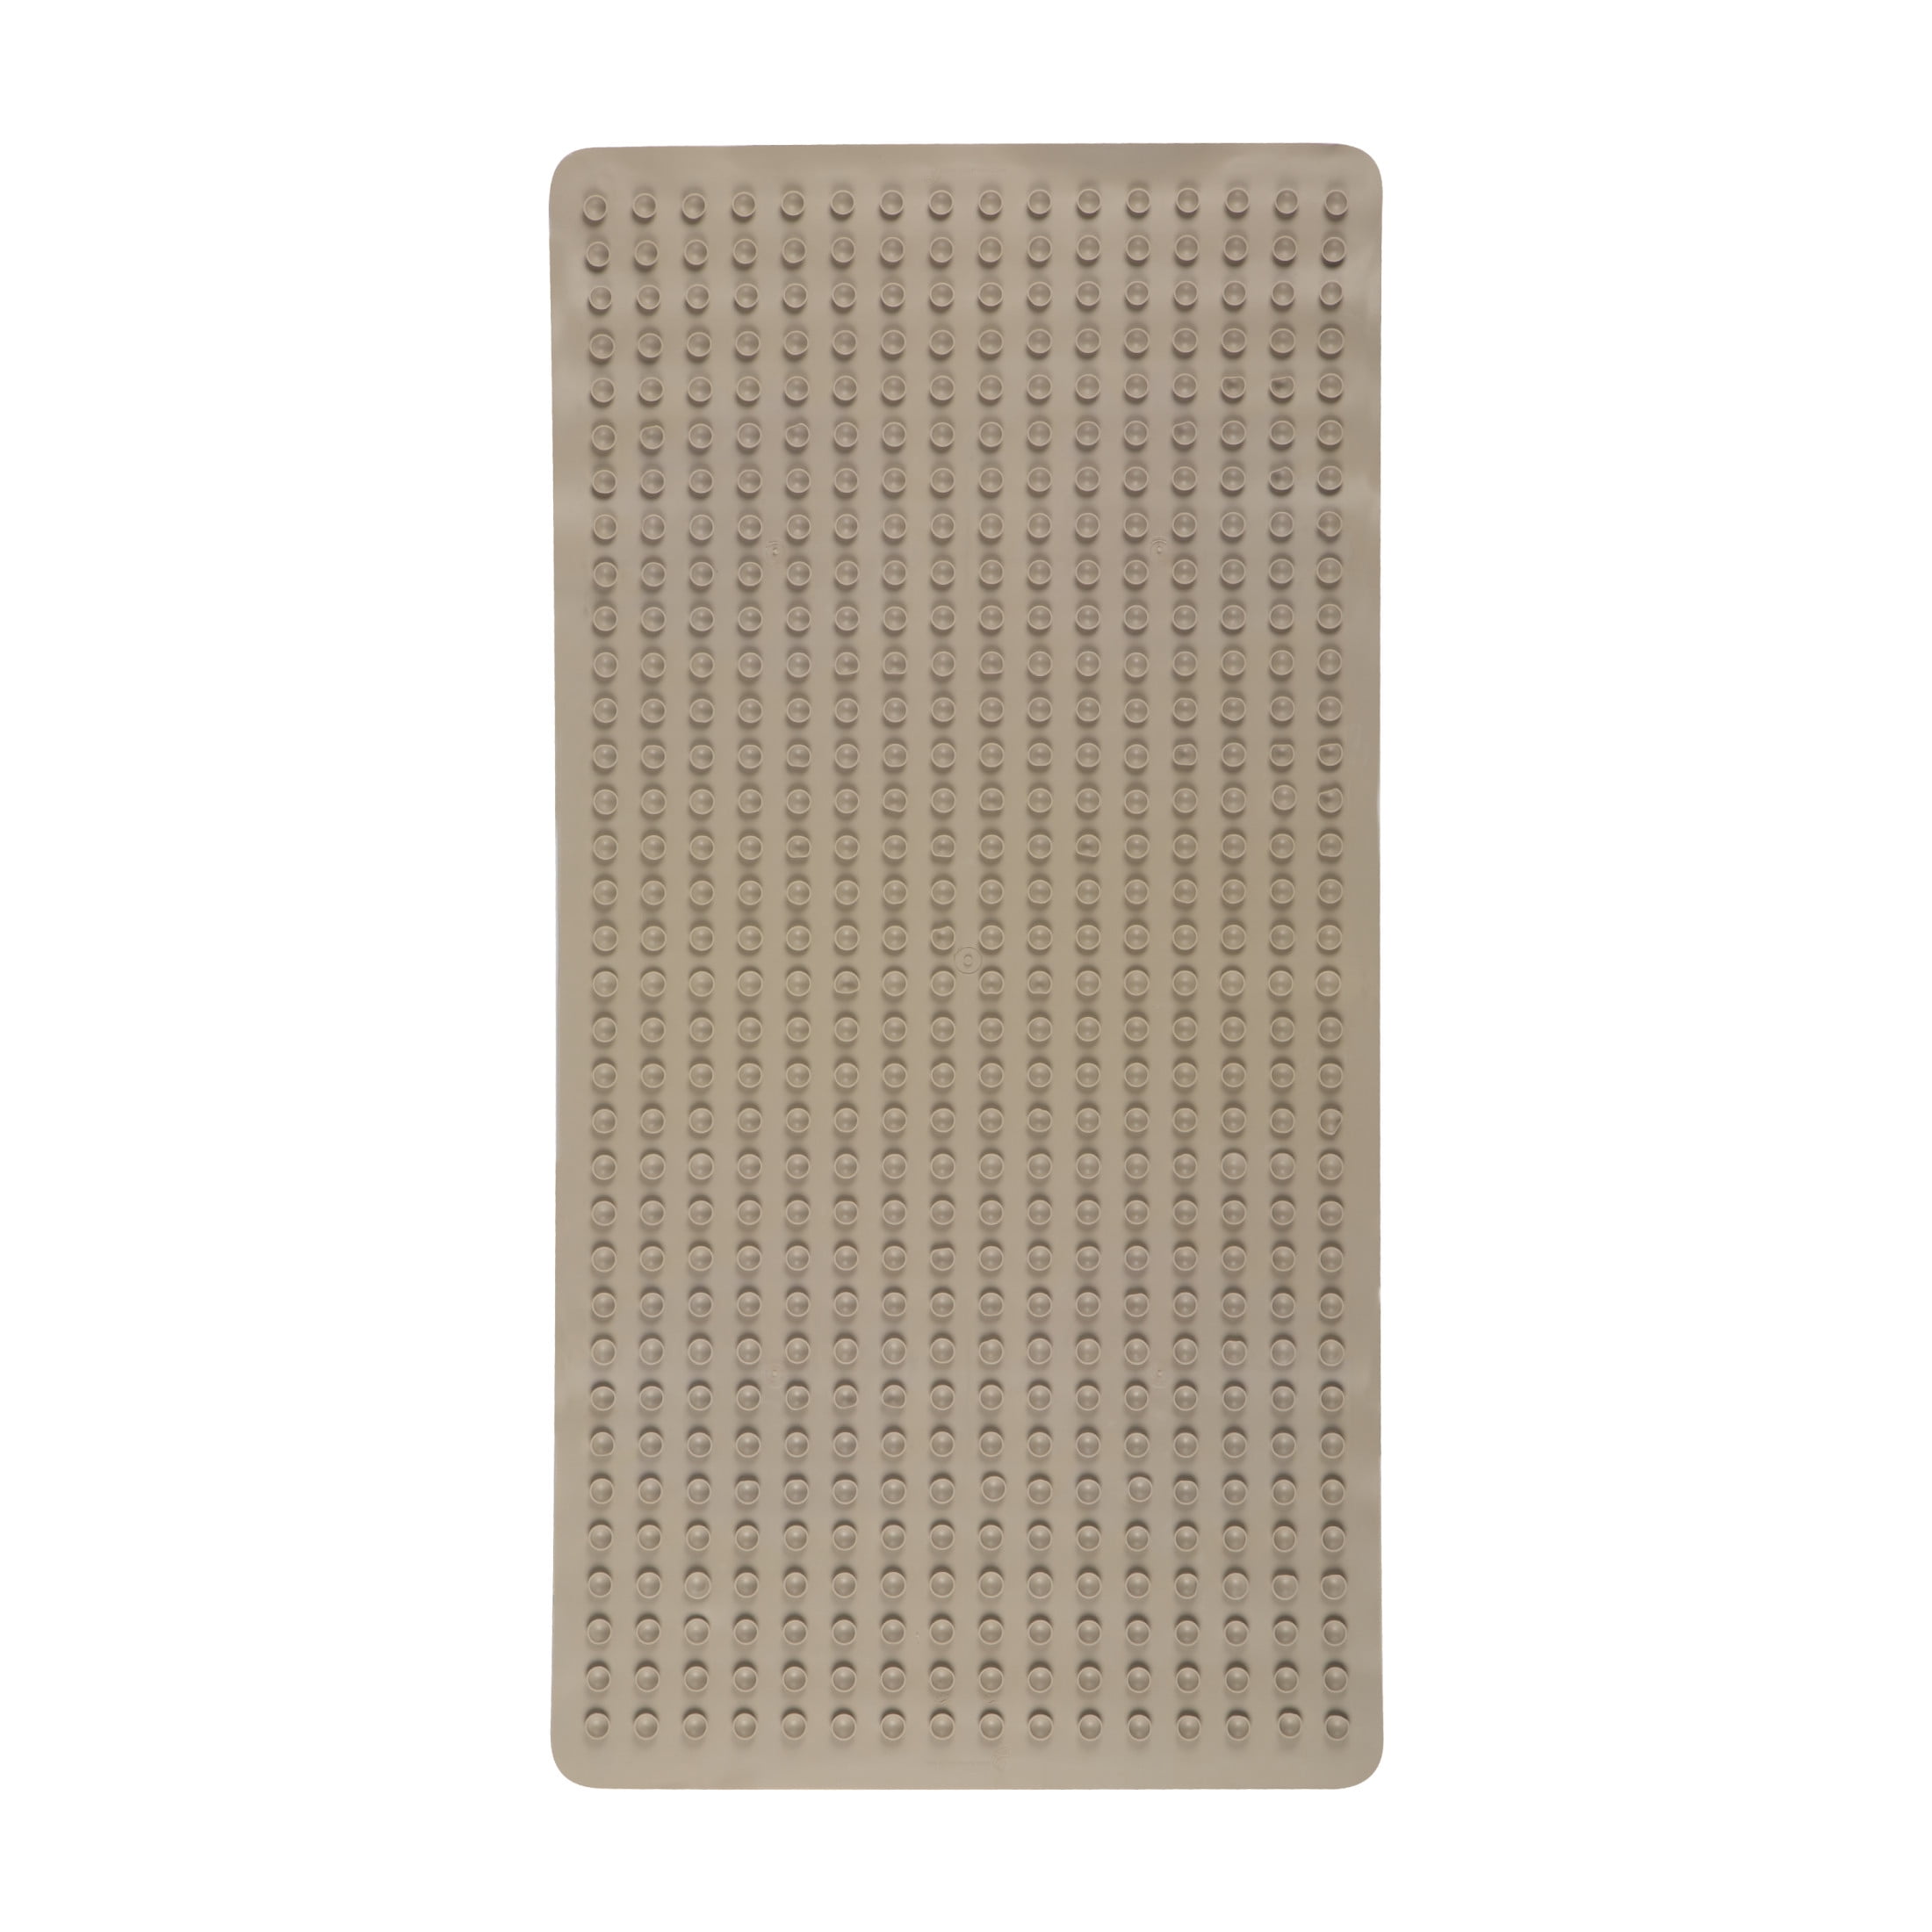 NEW Clorox Heavy Duty Antimicrobial Bath Shower Mat Slip Resistant 18 ×  36